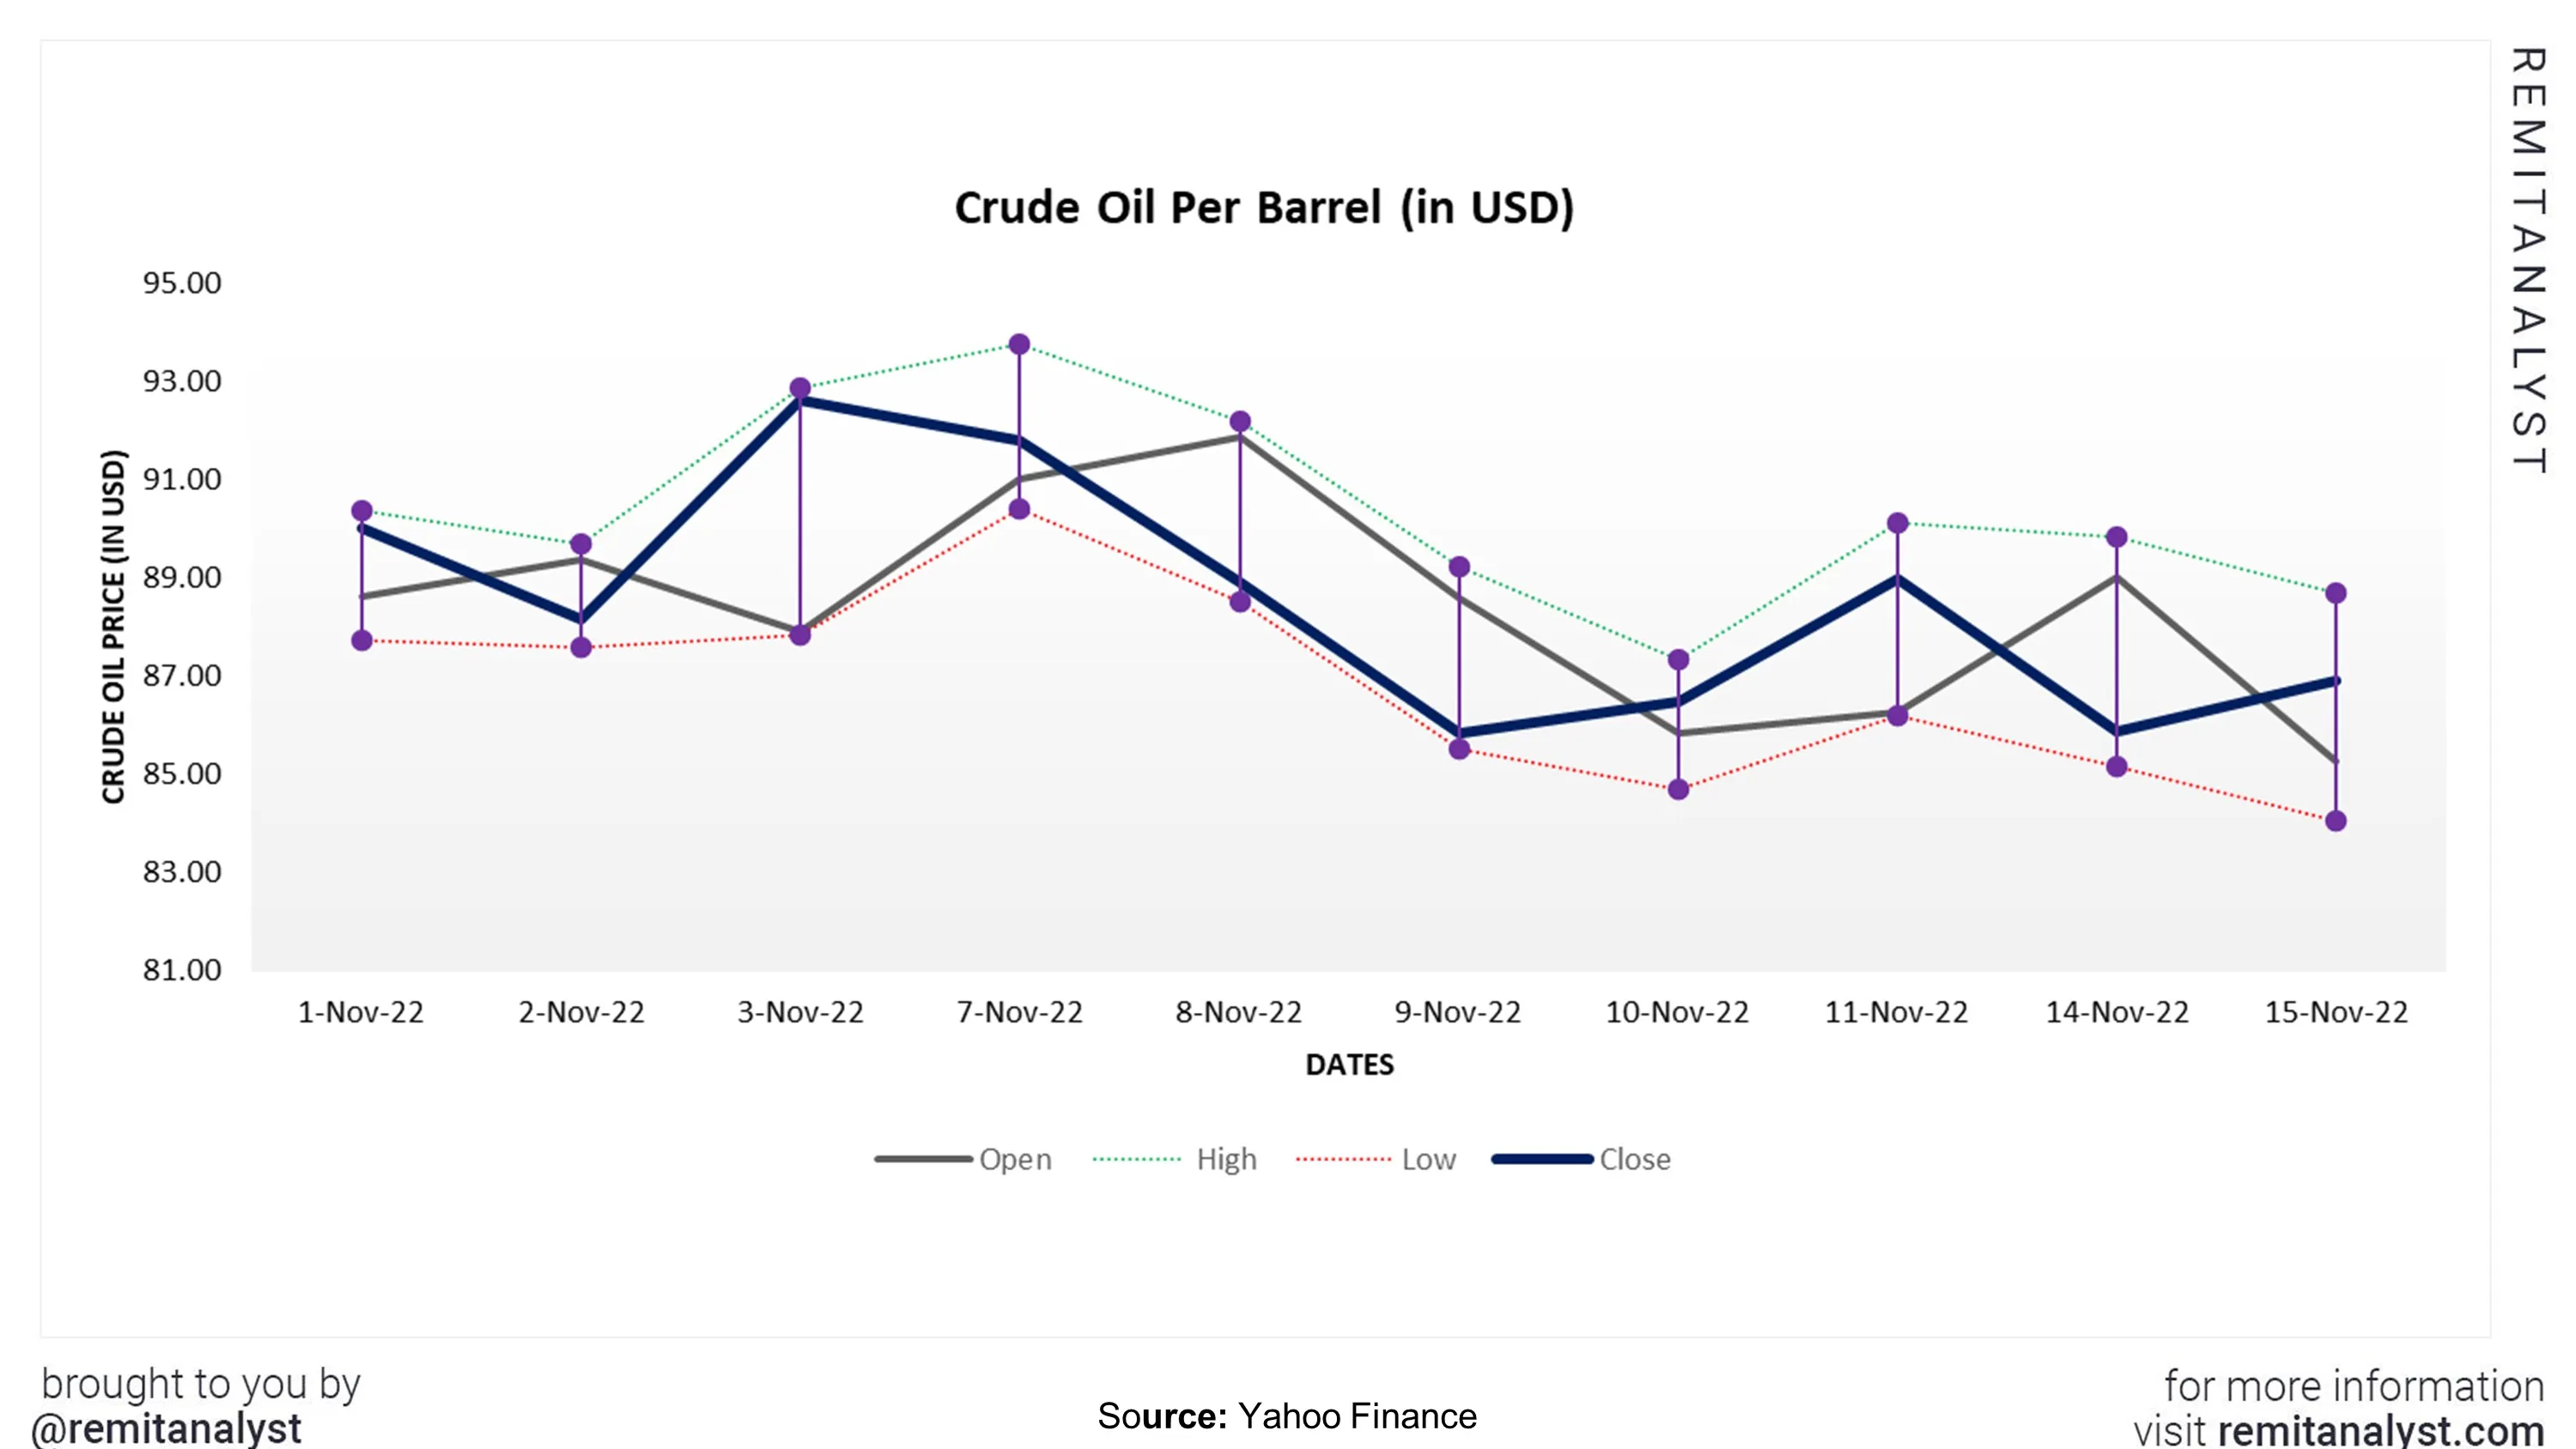 crude-oil-prices-from-1-nov-2022-to-15-nov-2022